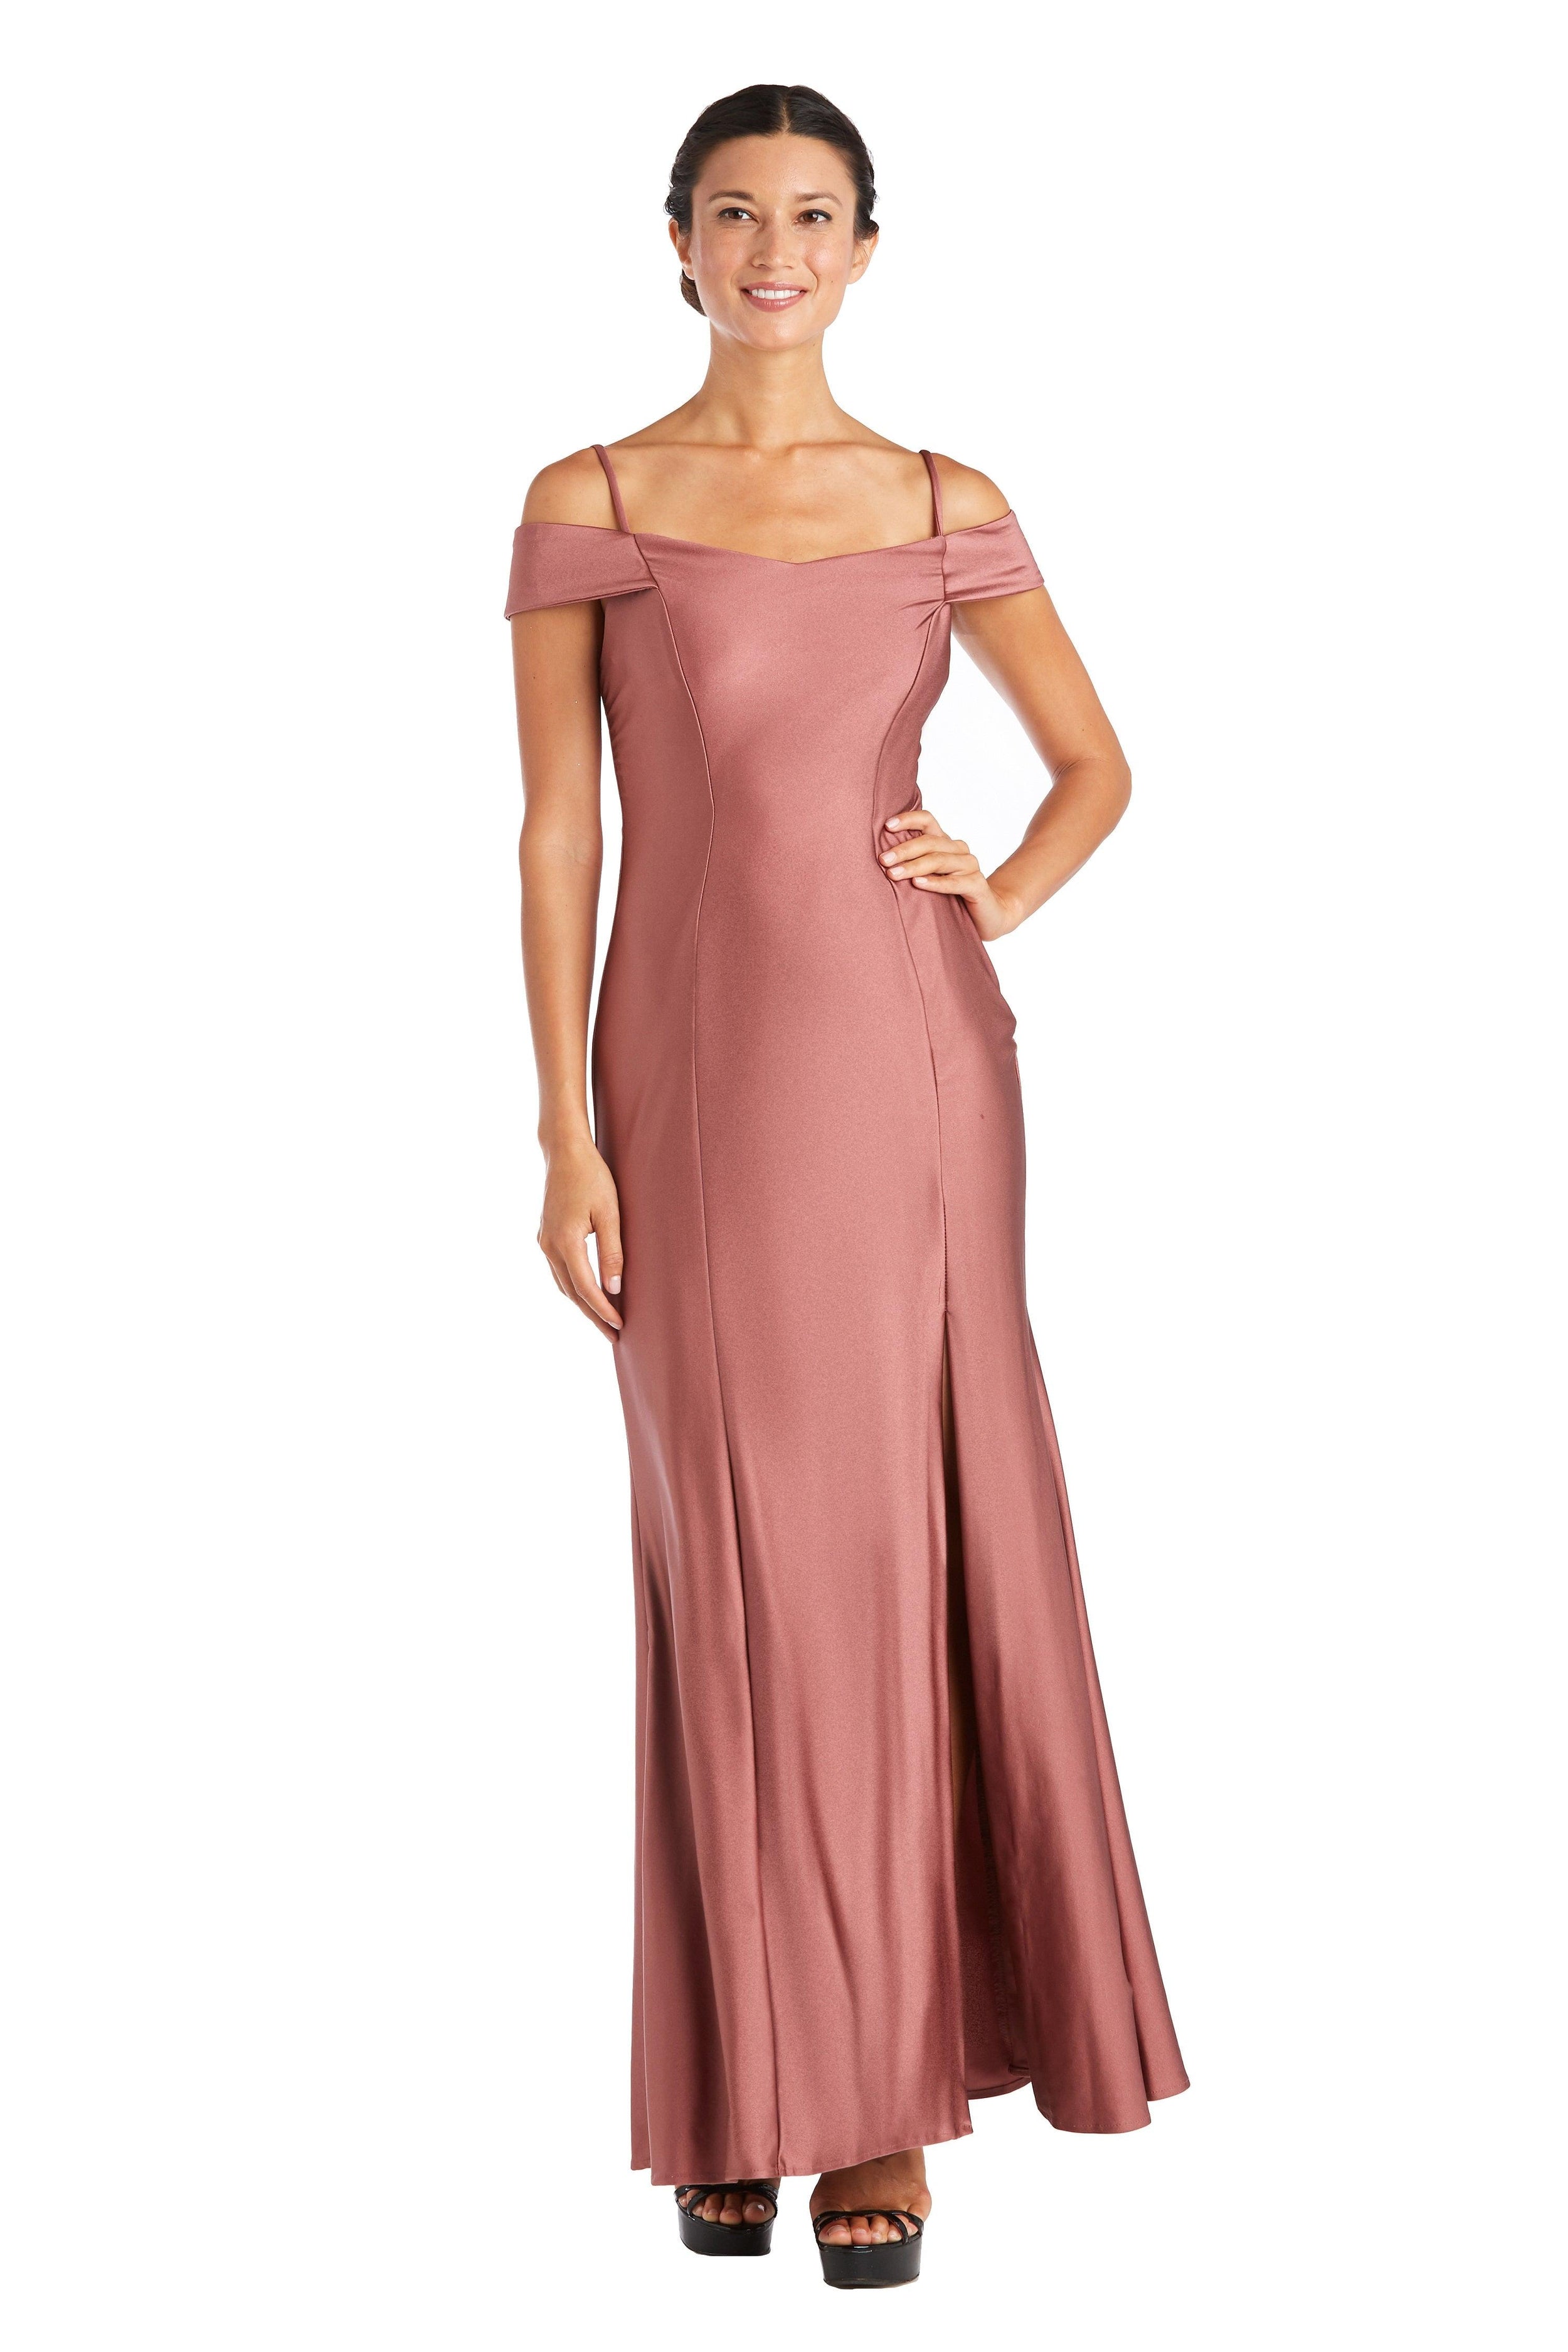 Morgan & Co 21942P Prom Long Formal Petite Dress